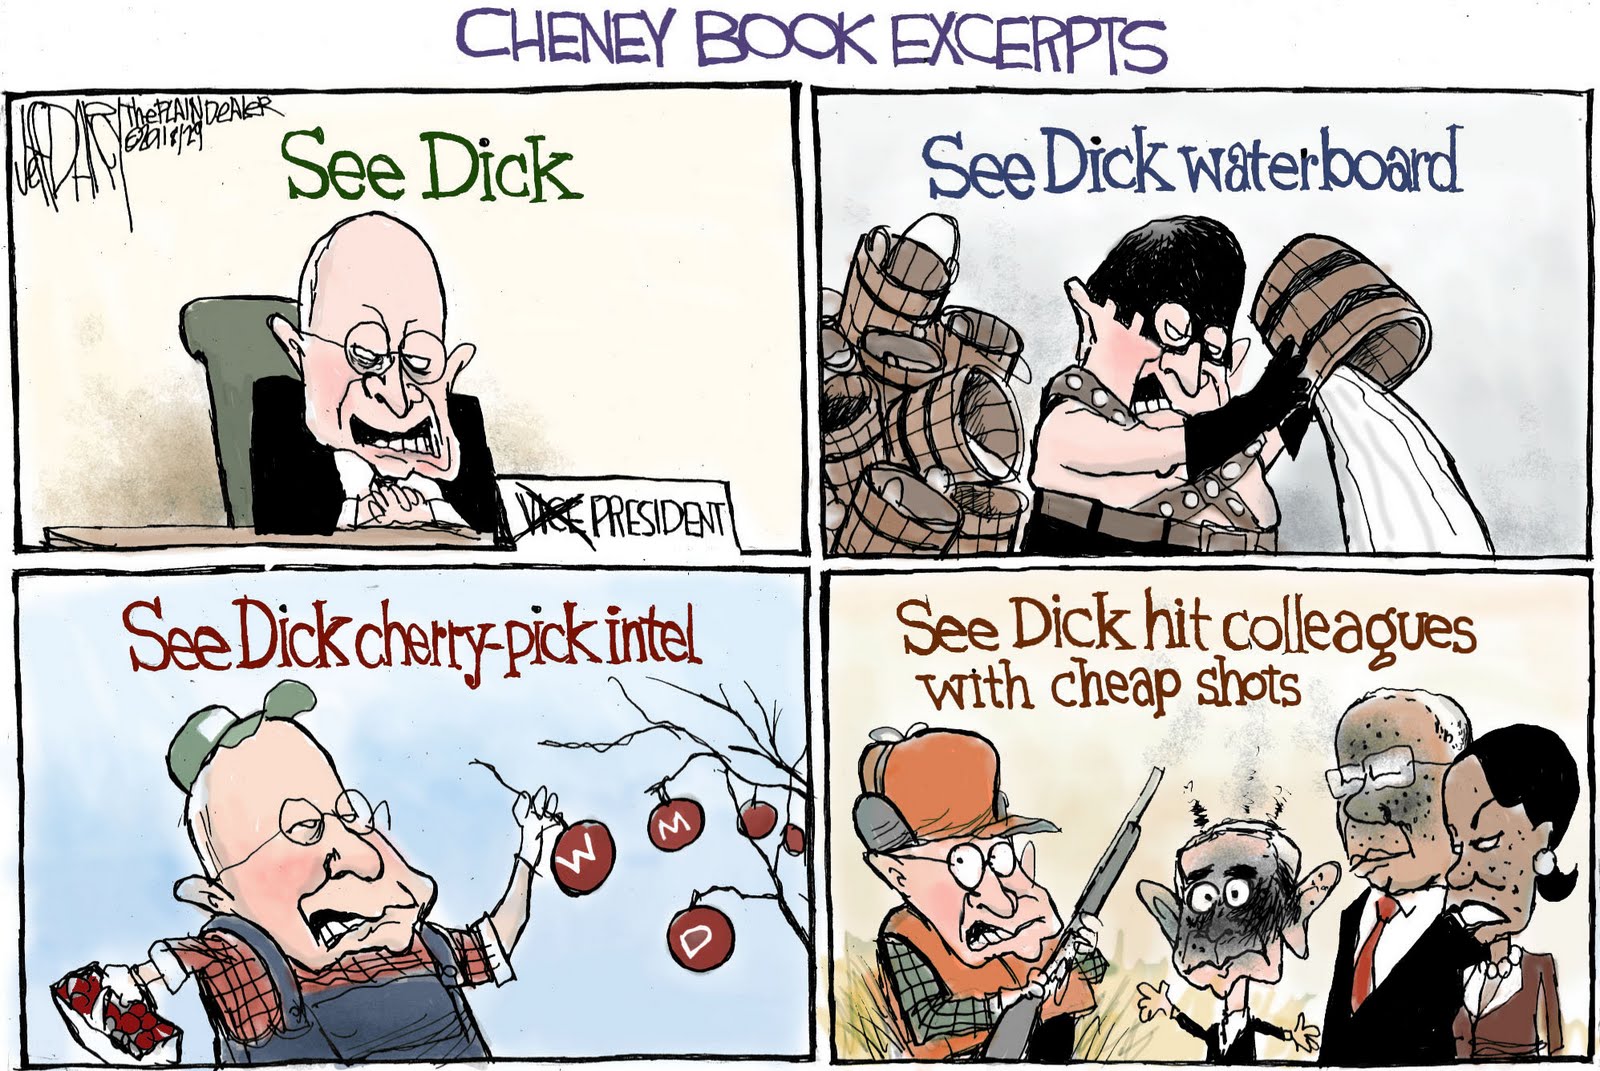 Dick cheney favorite books